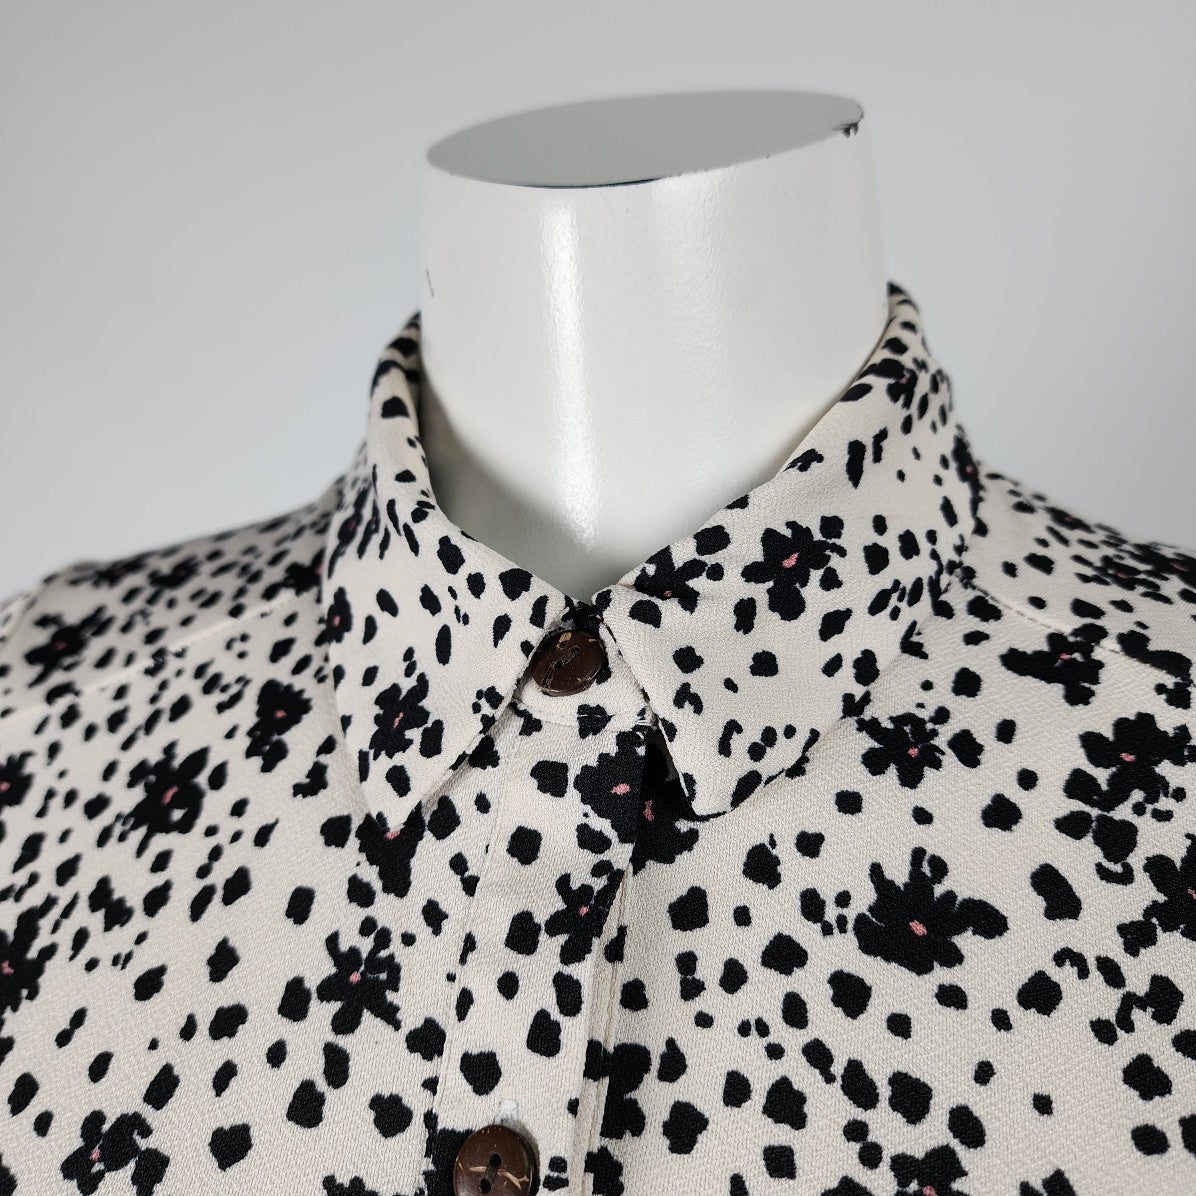 Monteau Black & White Print Long Sleeve Dress Size S